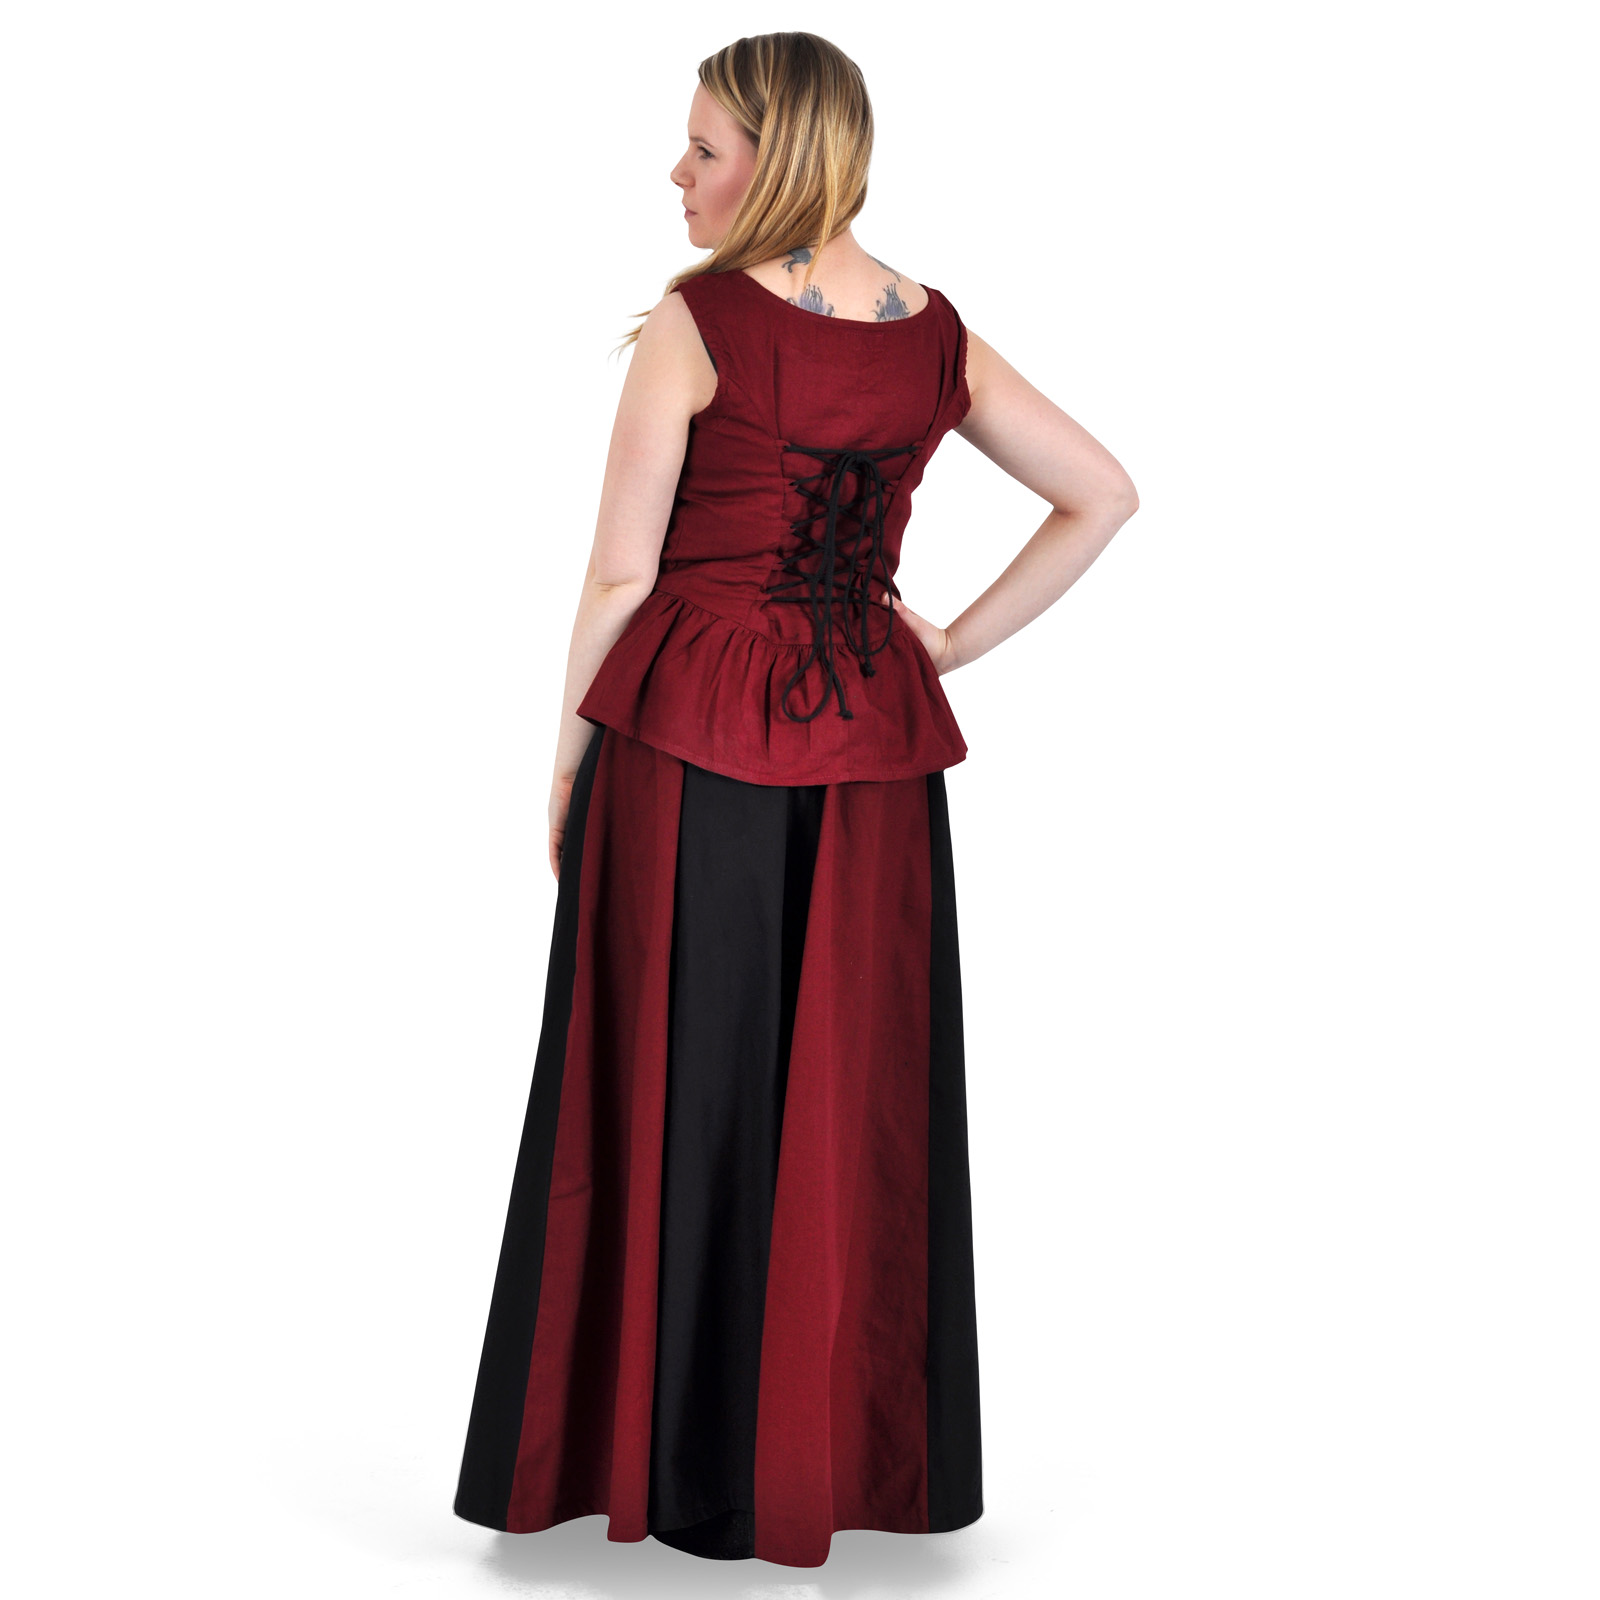 Estrella - Medieval Skirt black-red